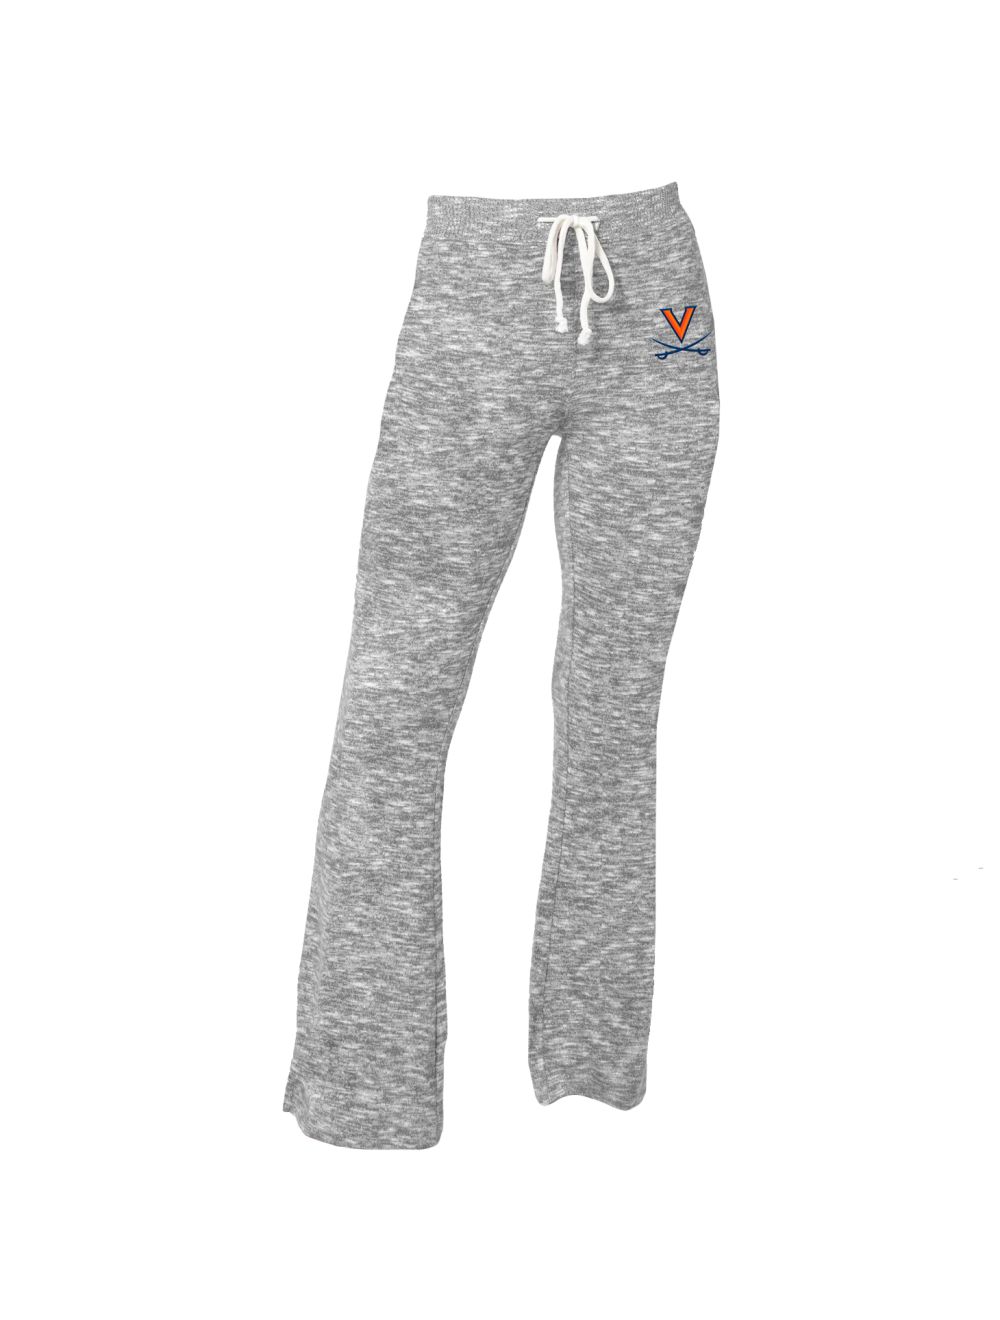 Comfort Grey Flare Pants, Women's Flare Pants